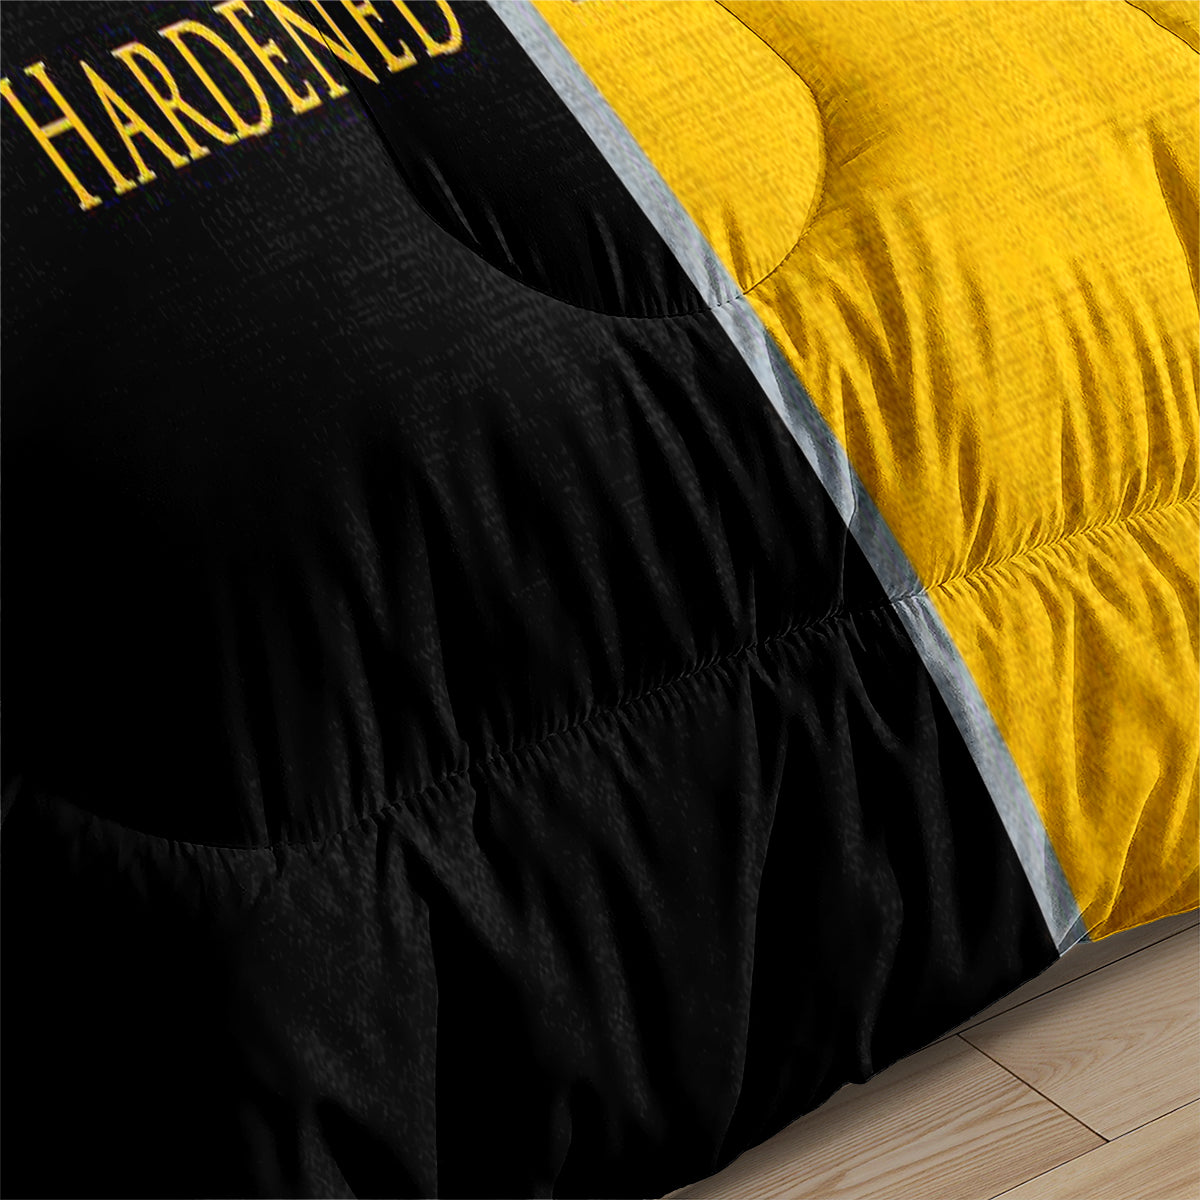 Pittsburgh Steelers Football Team Comforter Pillowcase Sets Blanket All Season Reversible Quilted Duvet